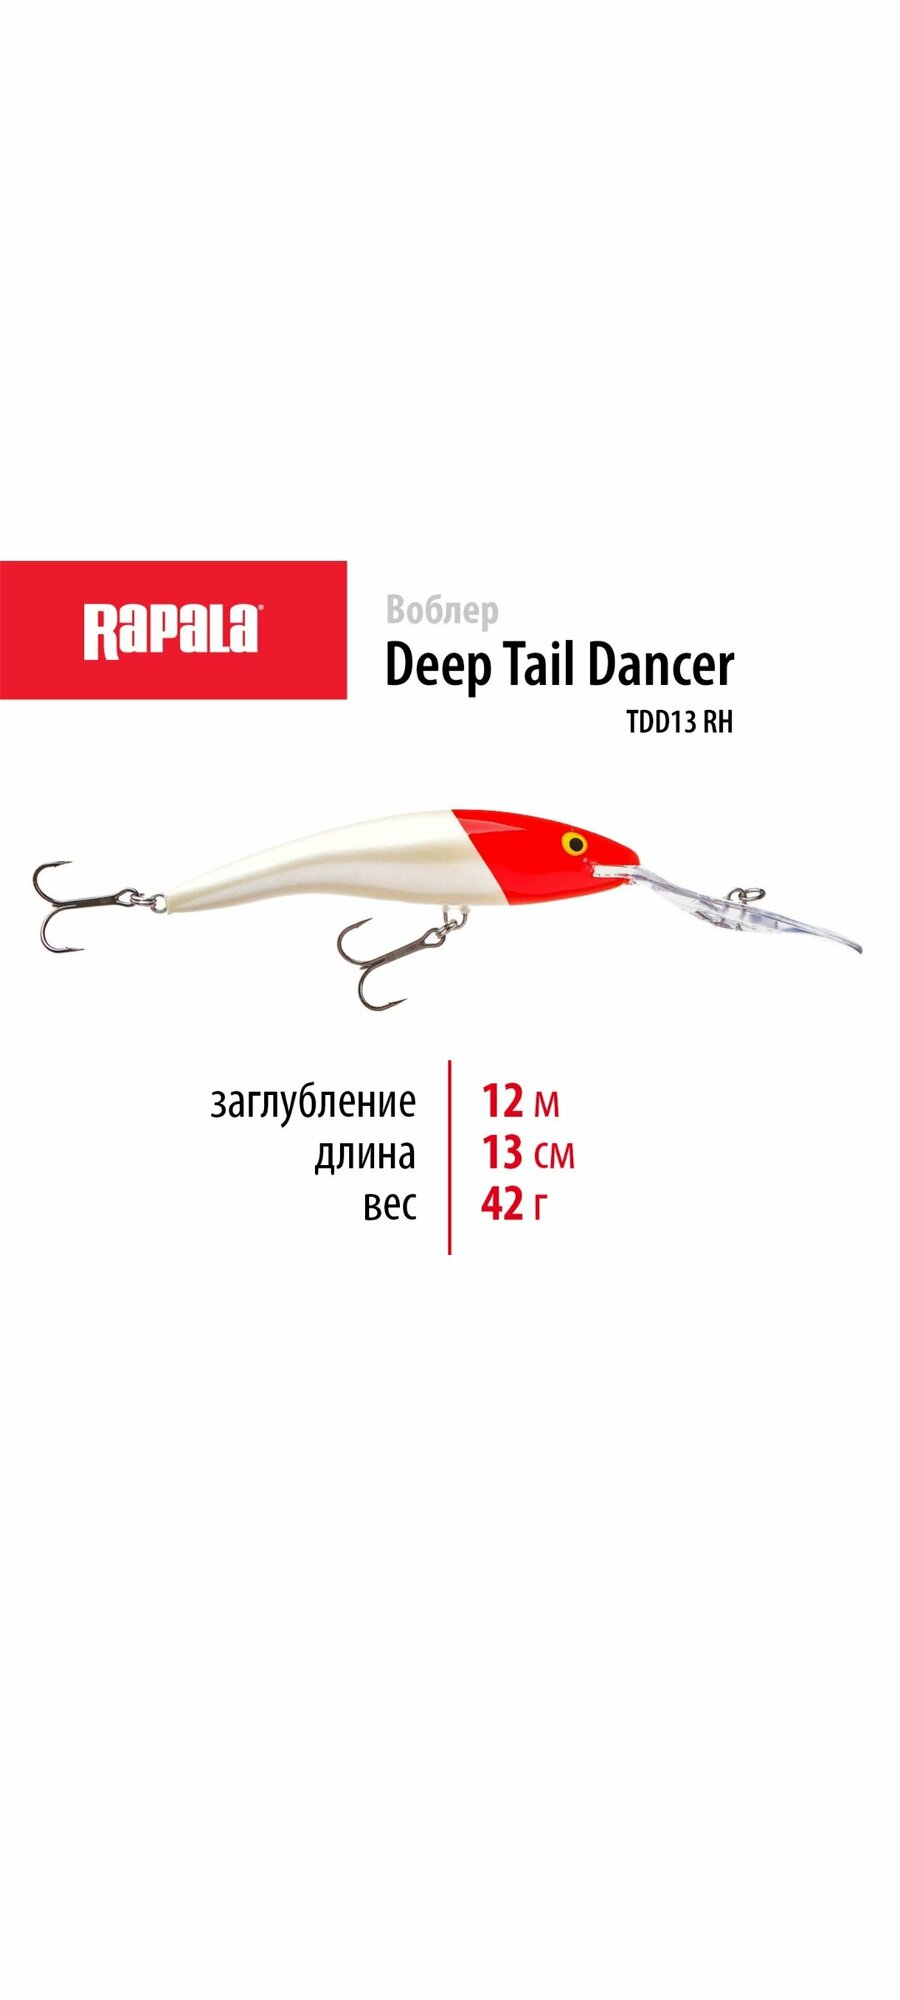 Воблер RAPALA Deep Tail Dancer 13 RH